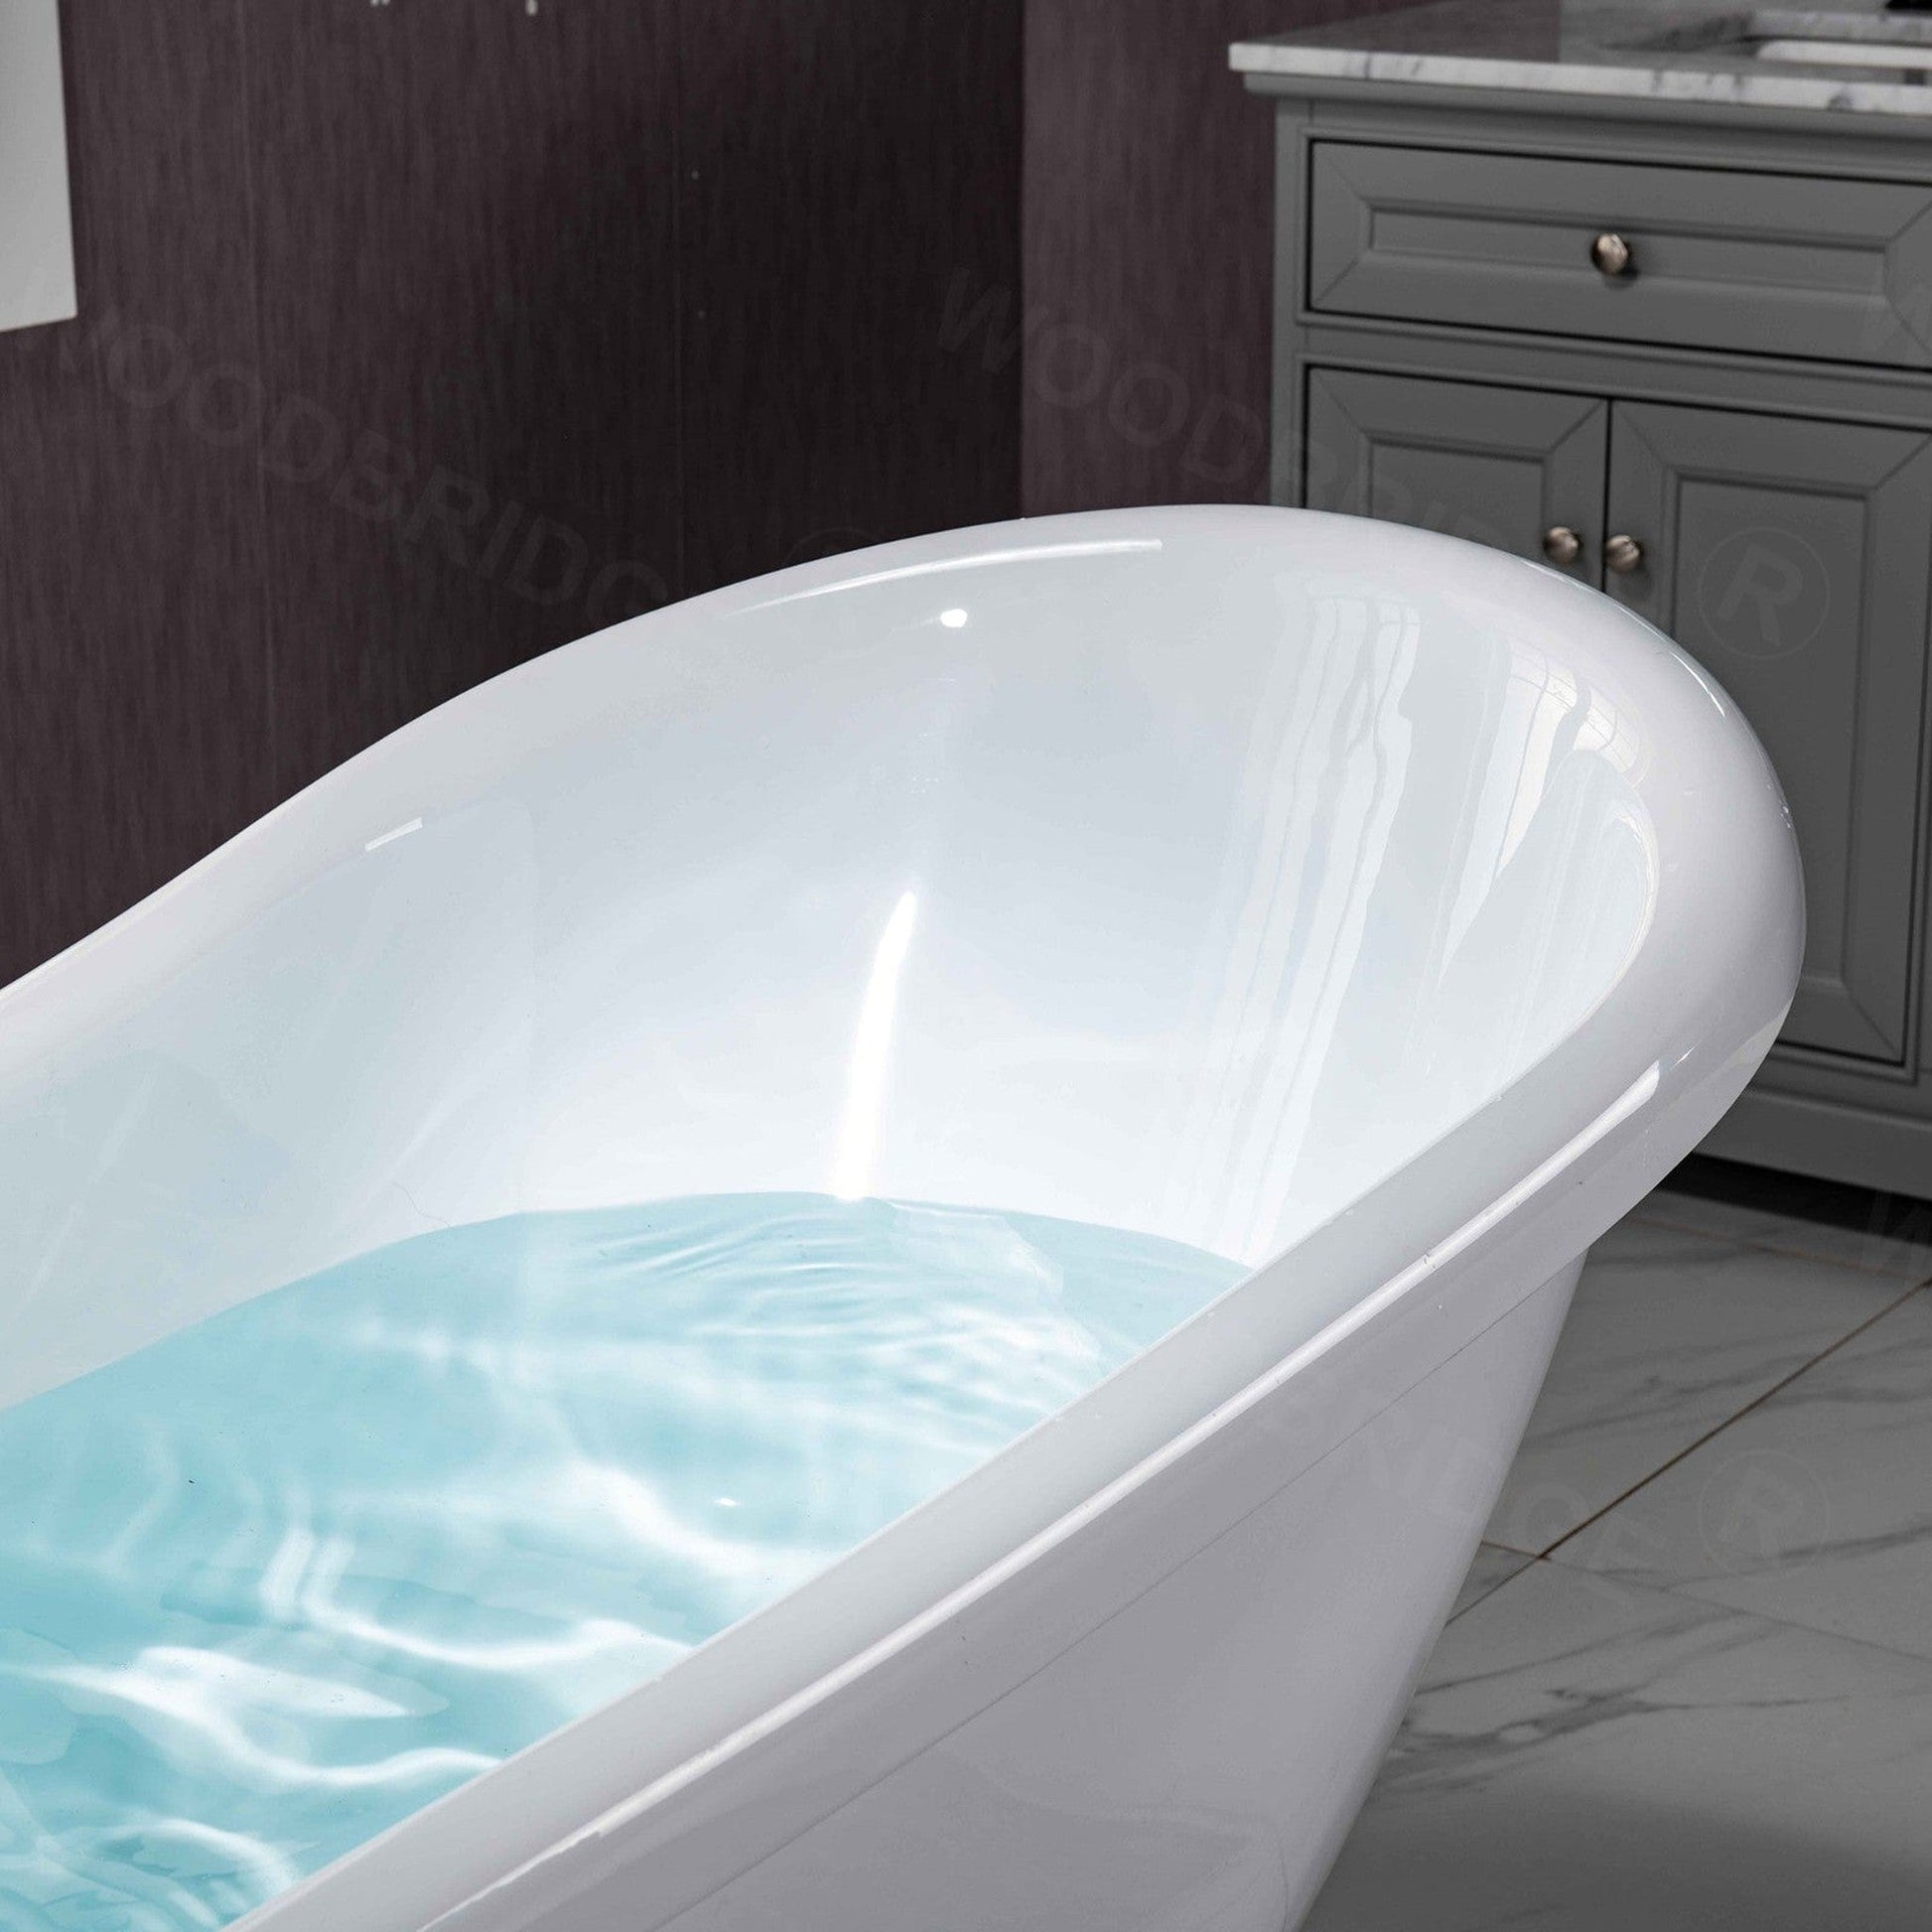 WoodBridge 67" White Acrylic Slipper Clawfoot Bath Tub With Chrome Feet, Drain, Overflow, F0071CHVT Tub Filler and Caddy Tray